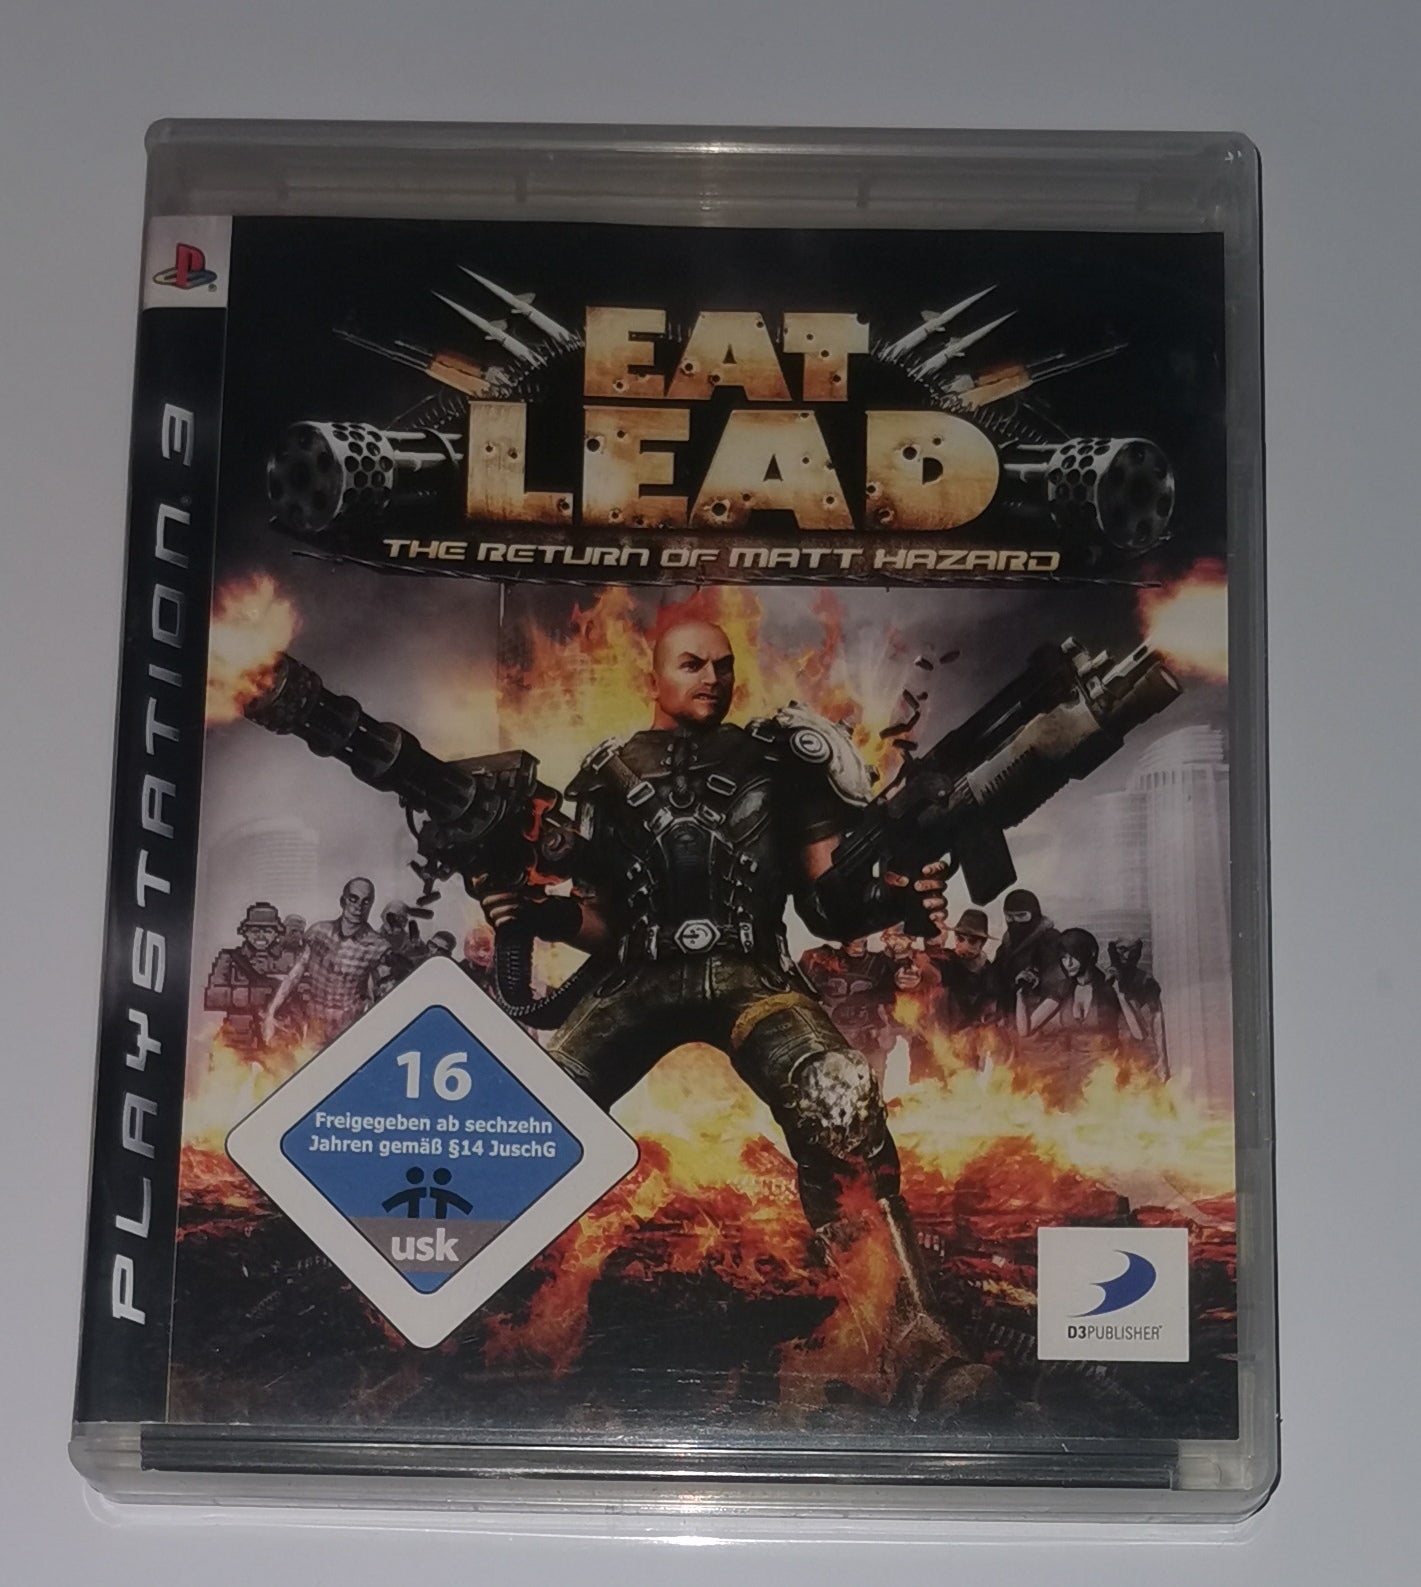 Eat Lead (Playstation 3) [Gut]